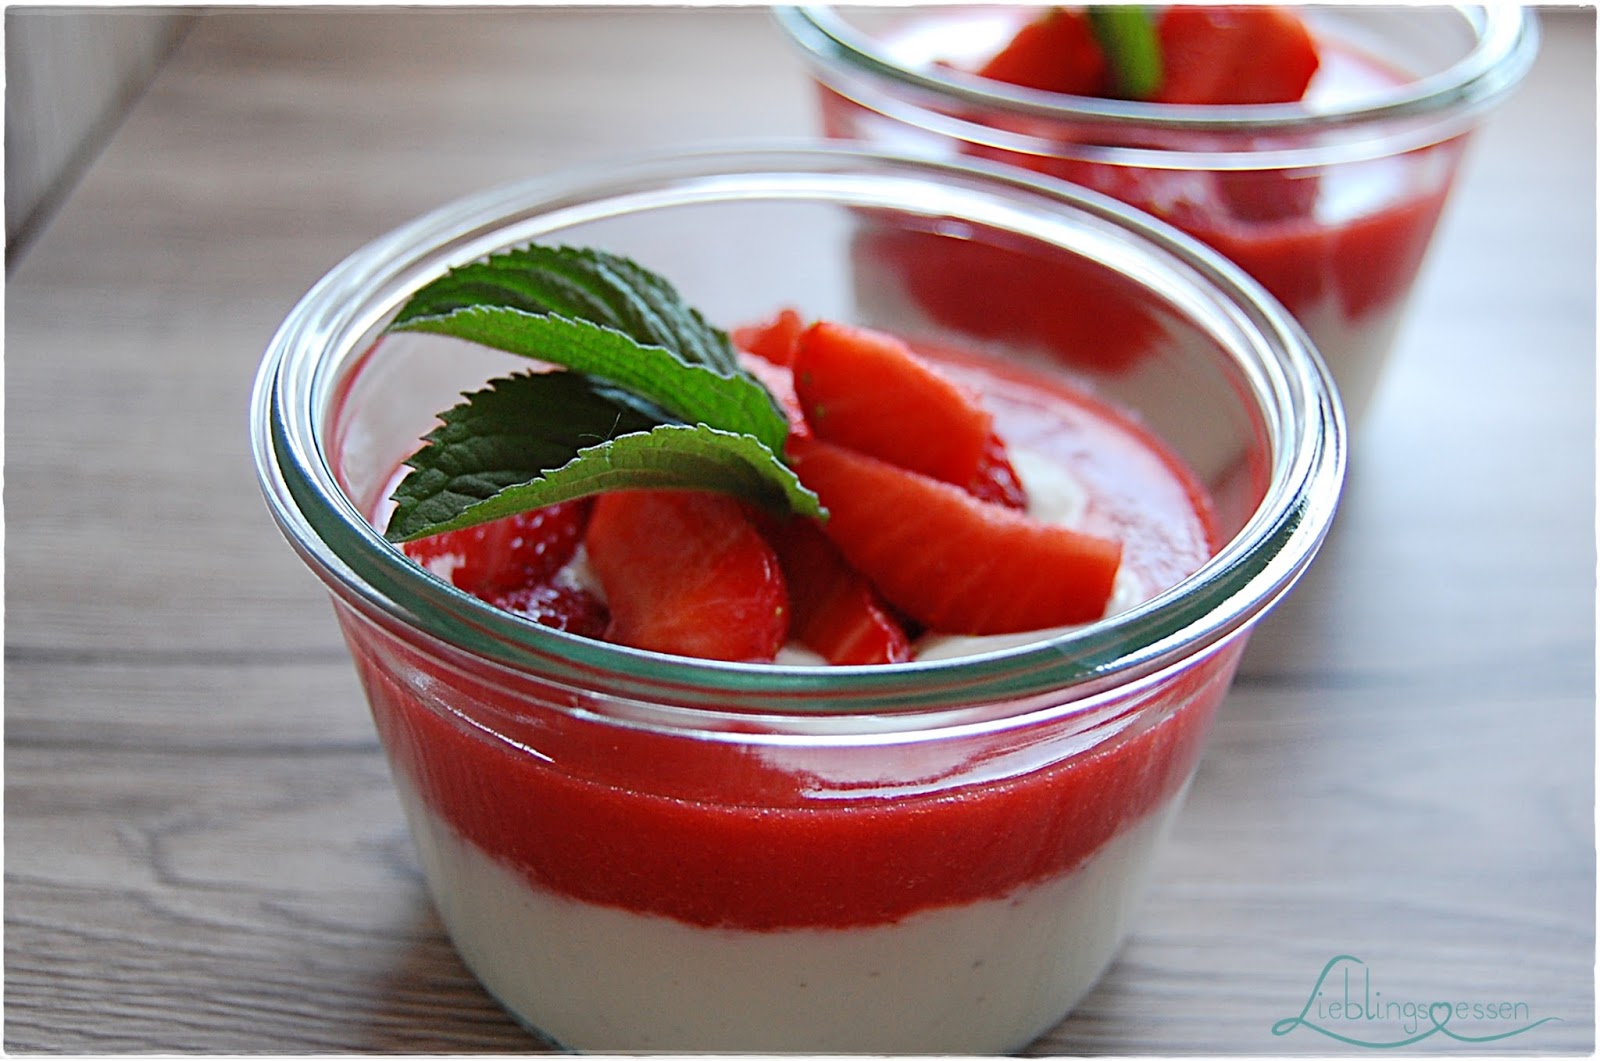 Lieblingsessen: Erdbeer Dessert